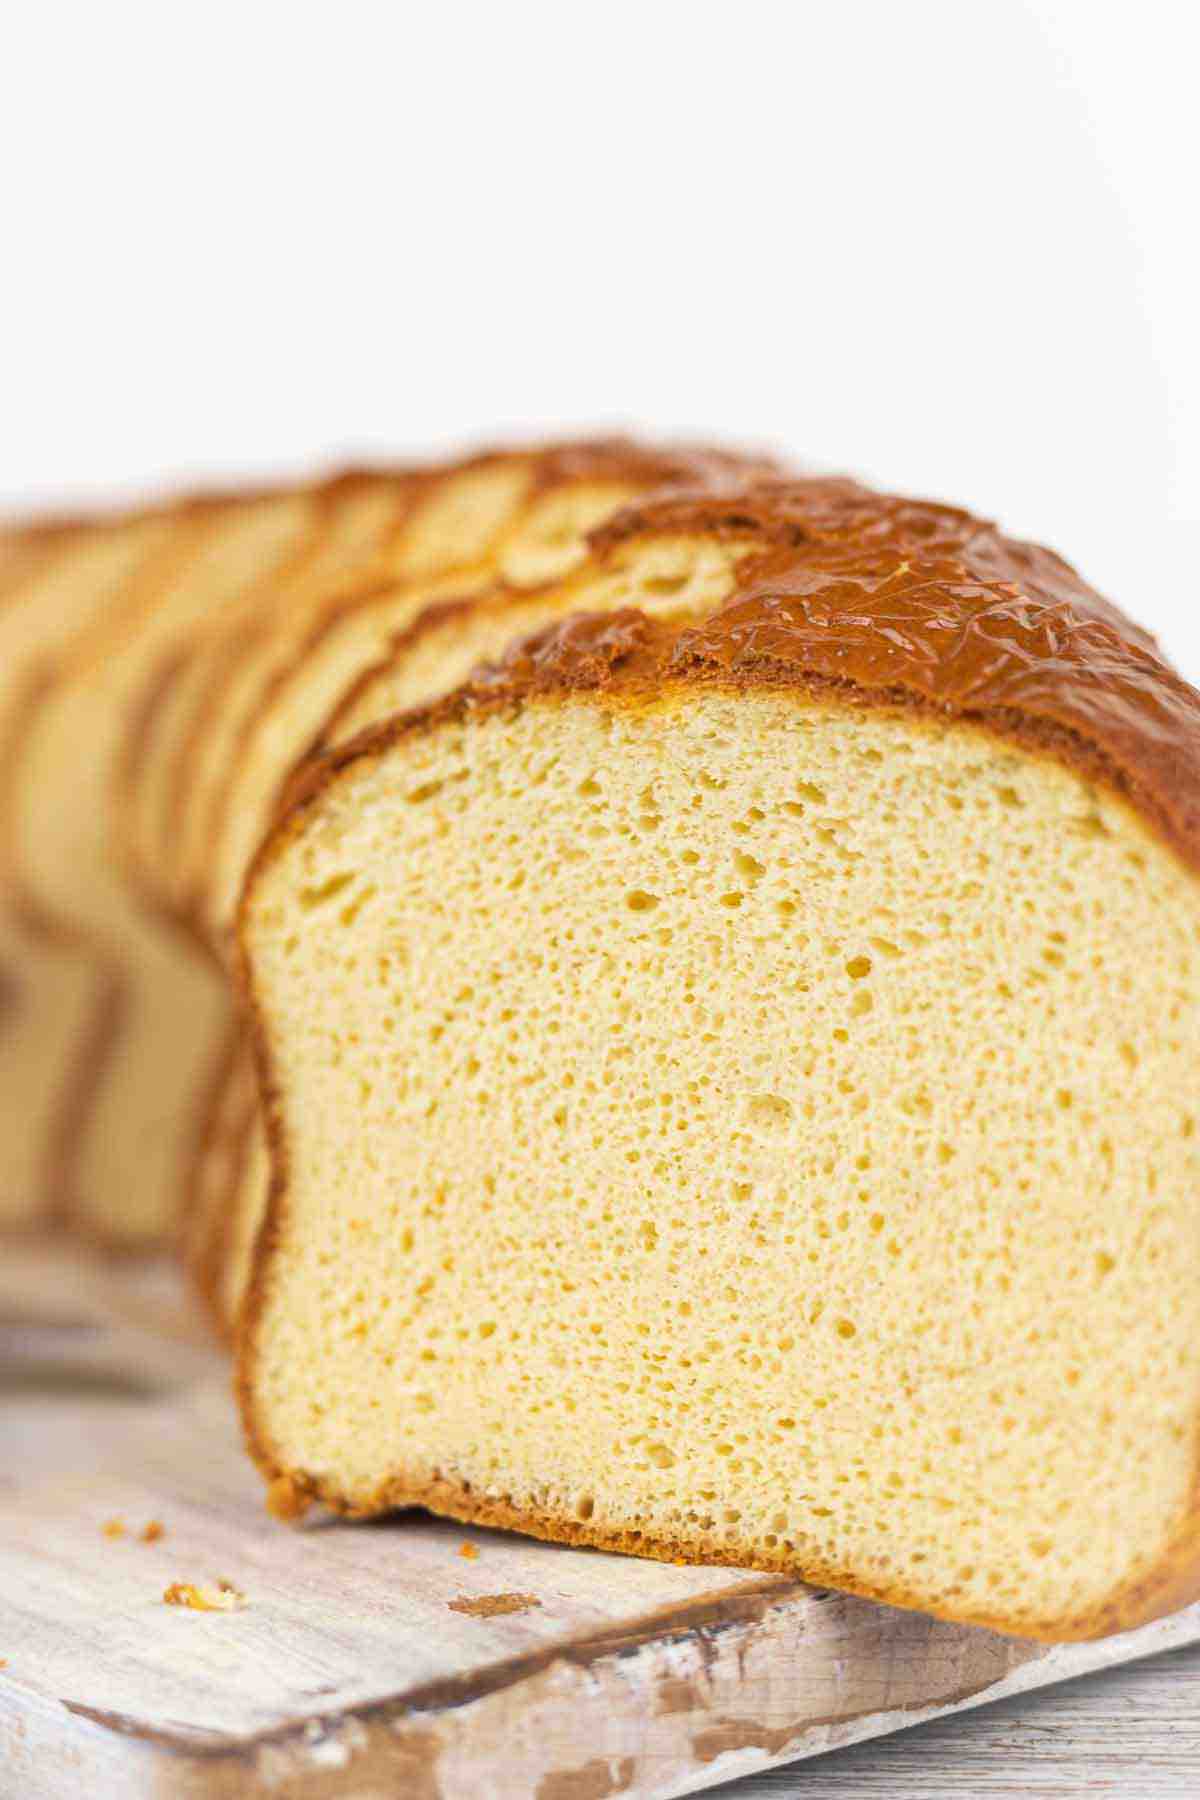 Keto Loaf Bread cut into slices.